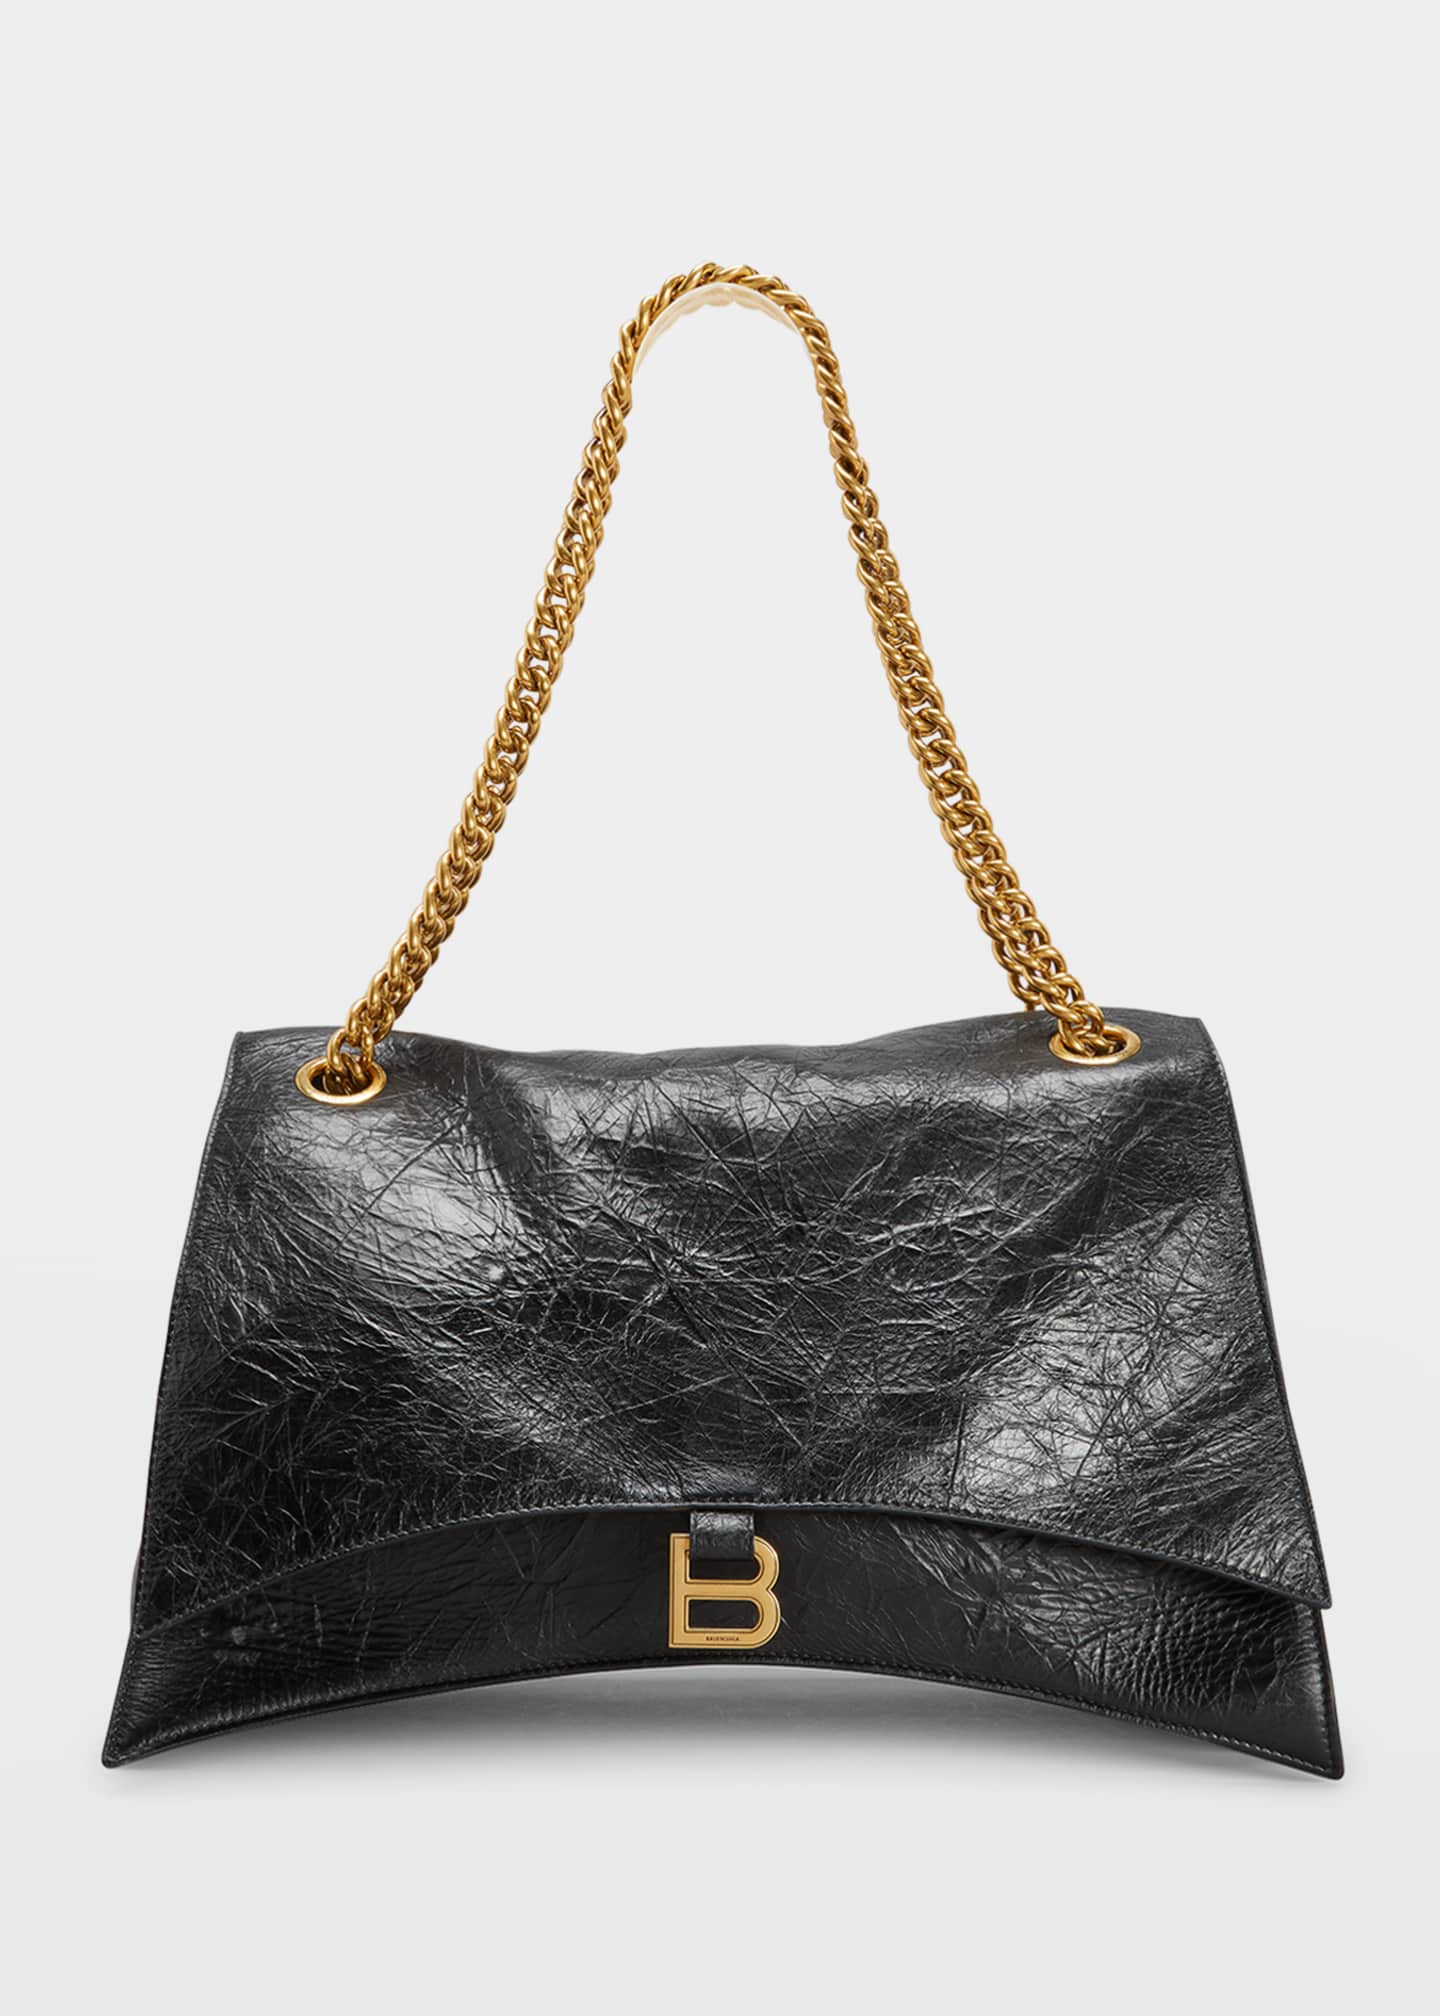 Balenciaga Crush Large Crinkled Leather Chain Shoulder Bag